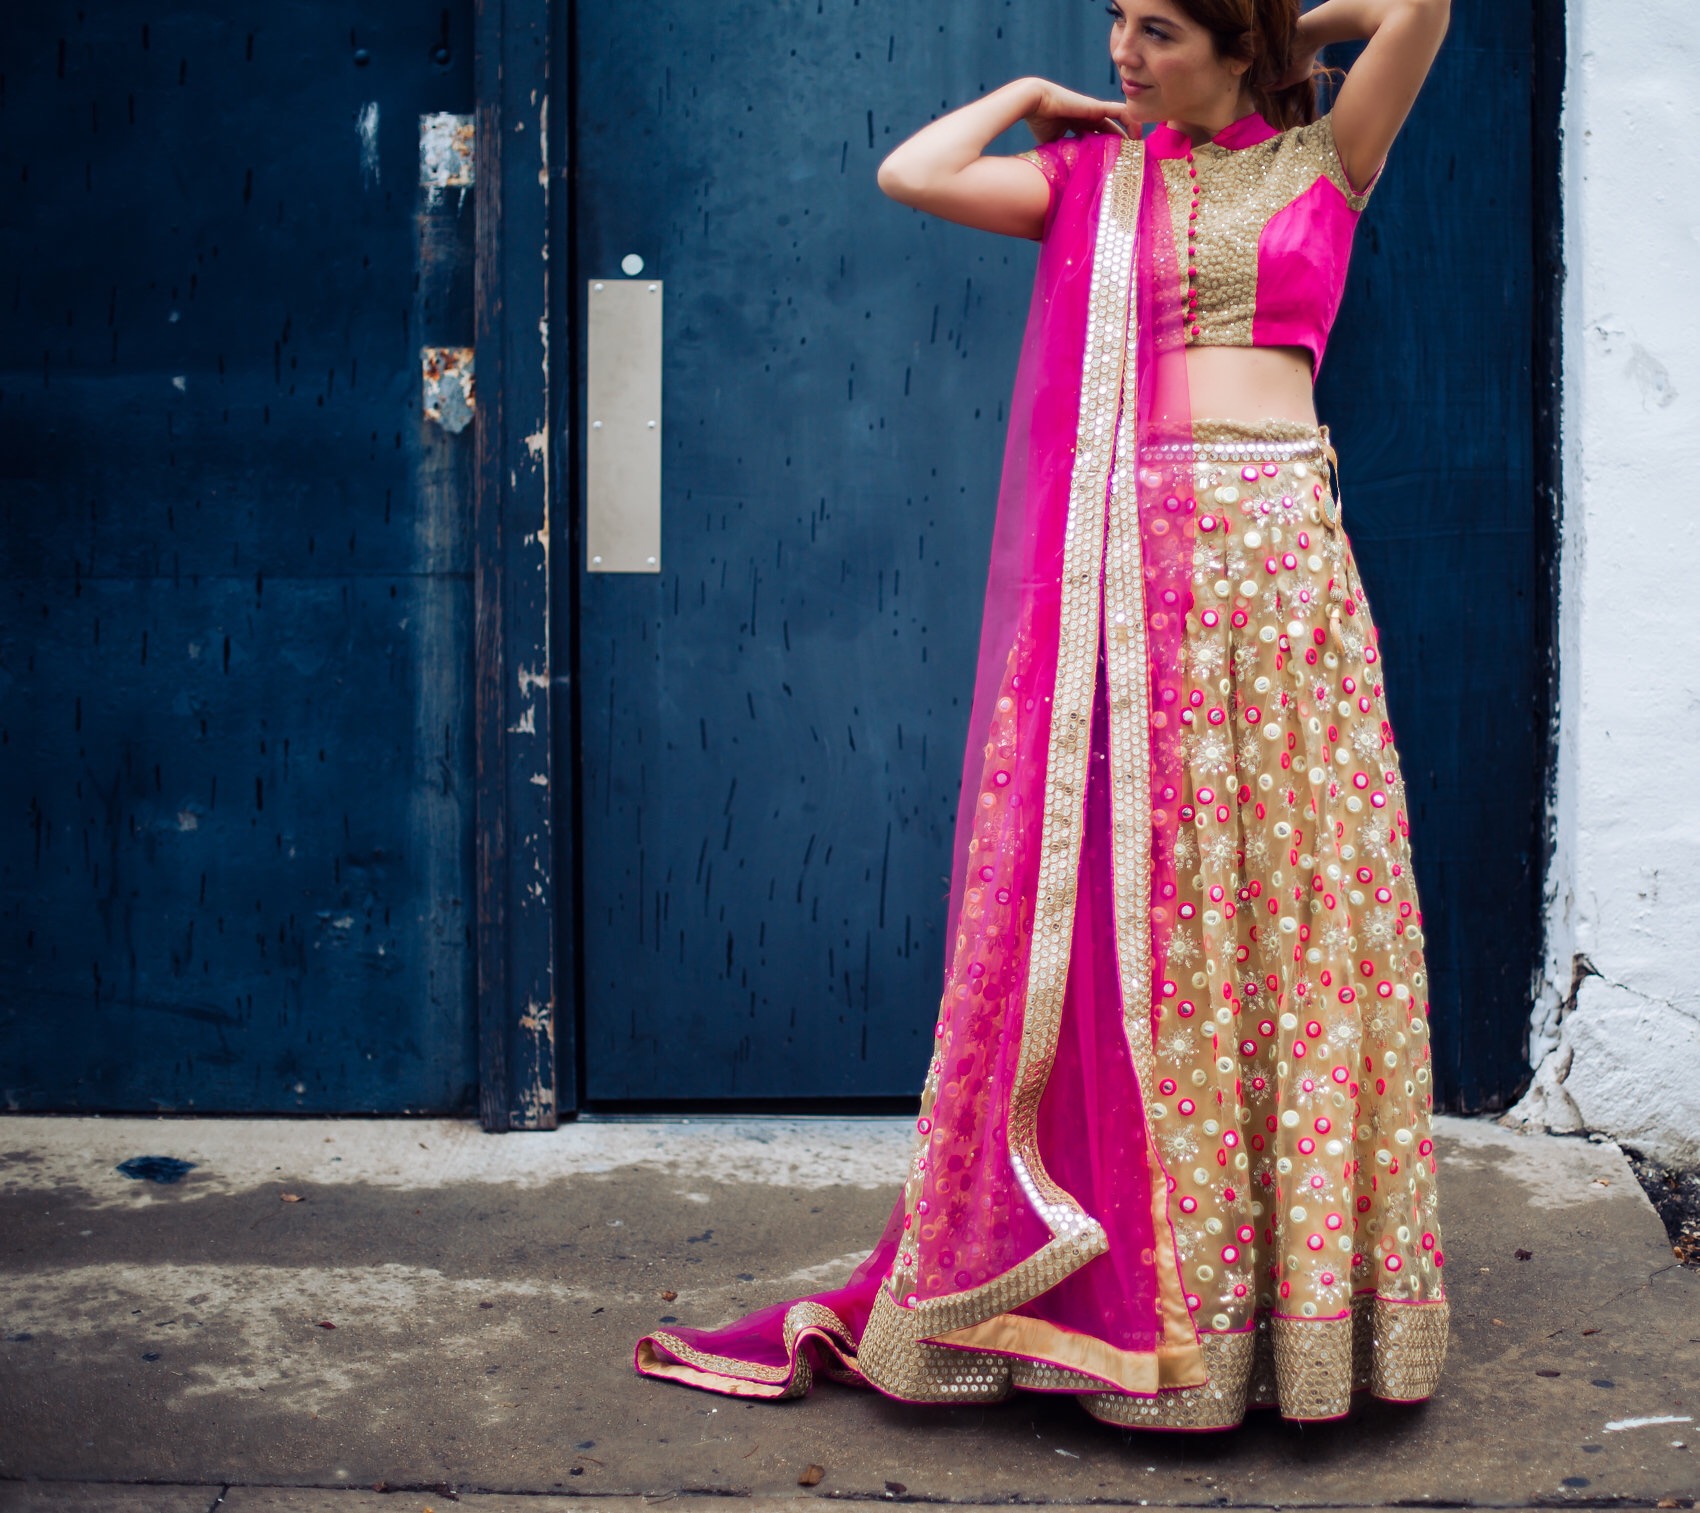 fashionveggie wearing custom-made indian dress by pastels by aj dallas